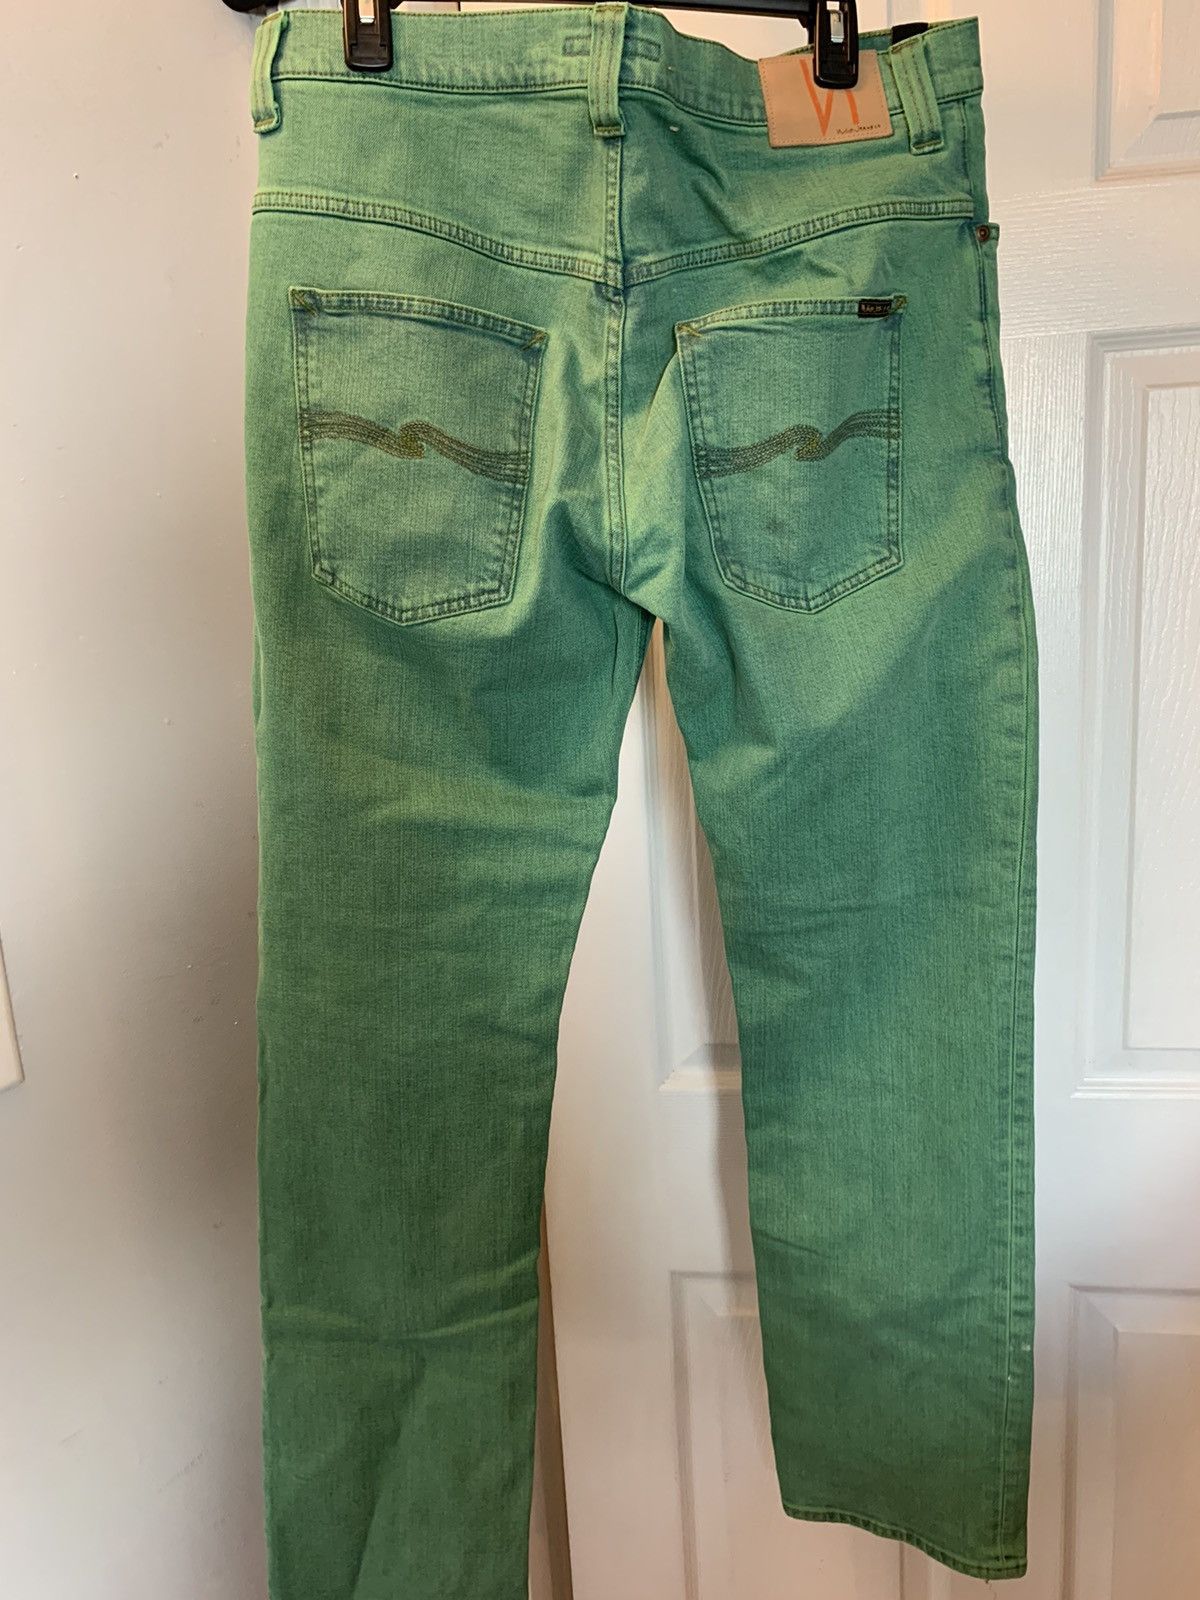 Nudie Jeans Nudie Jeans Green Denim Straight Jeans Size US 36 / EU 52 - 5 Thumbnail